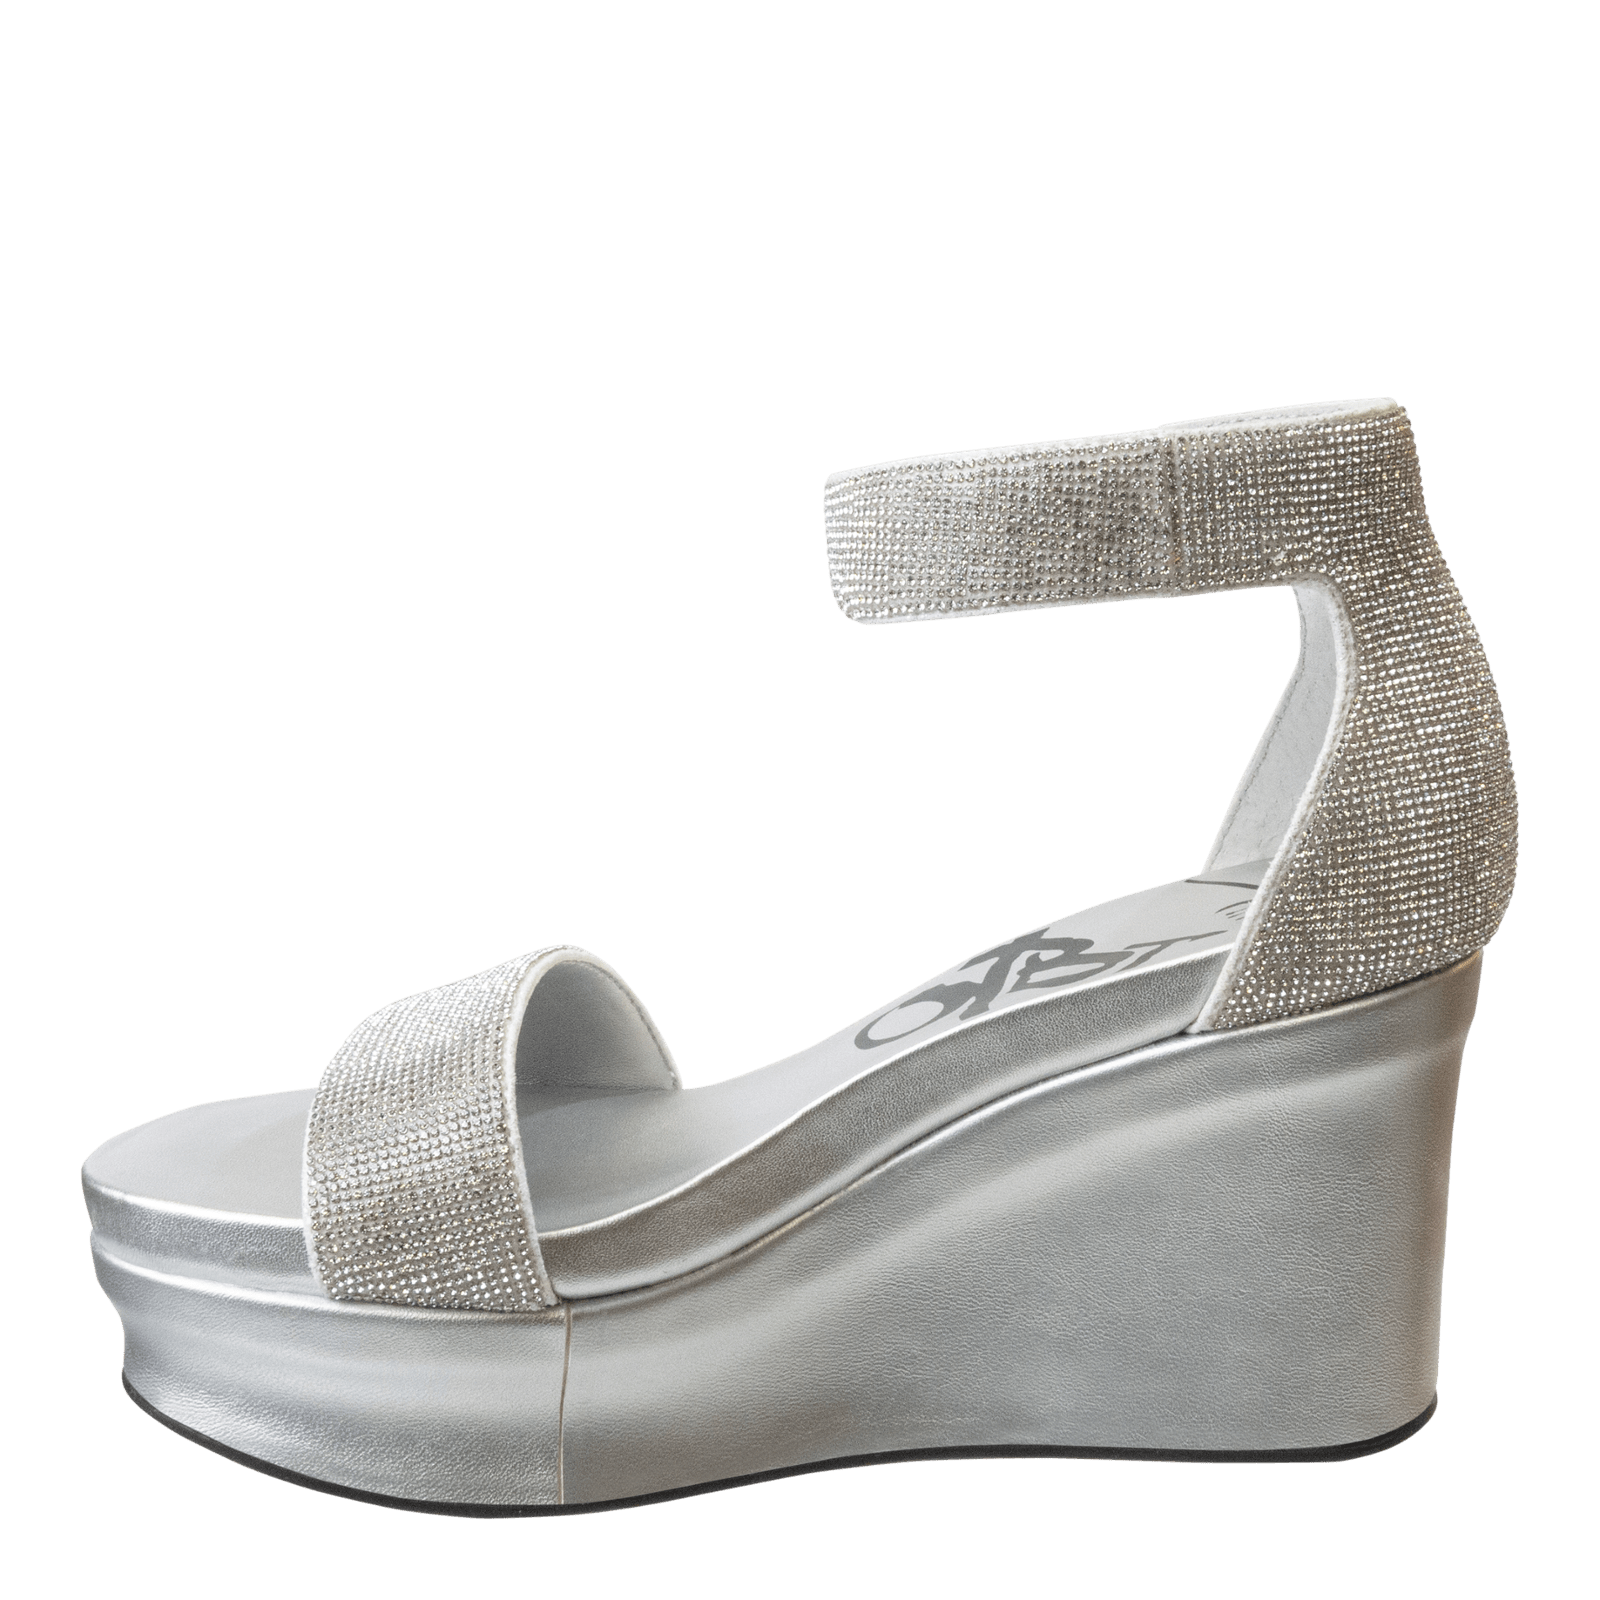 OTBT - STATUS in SILVER Wedge Sandals WOMEN FOOTWEAR OTBT 